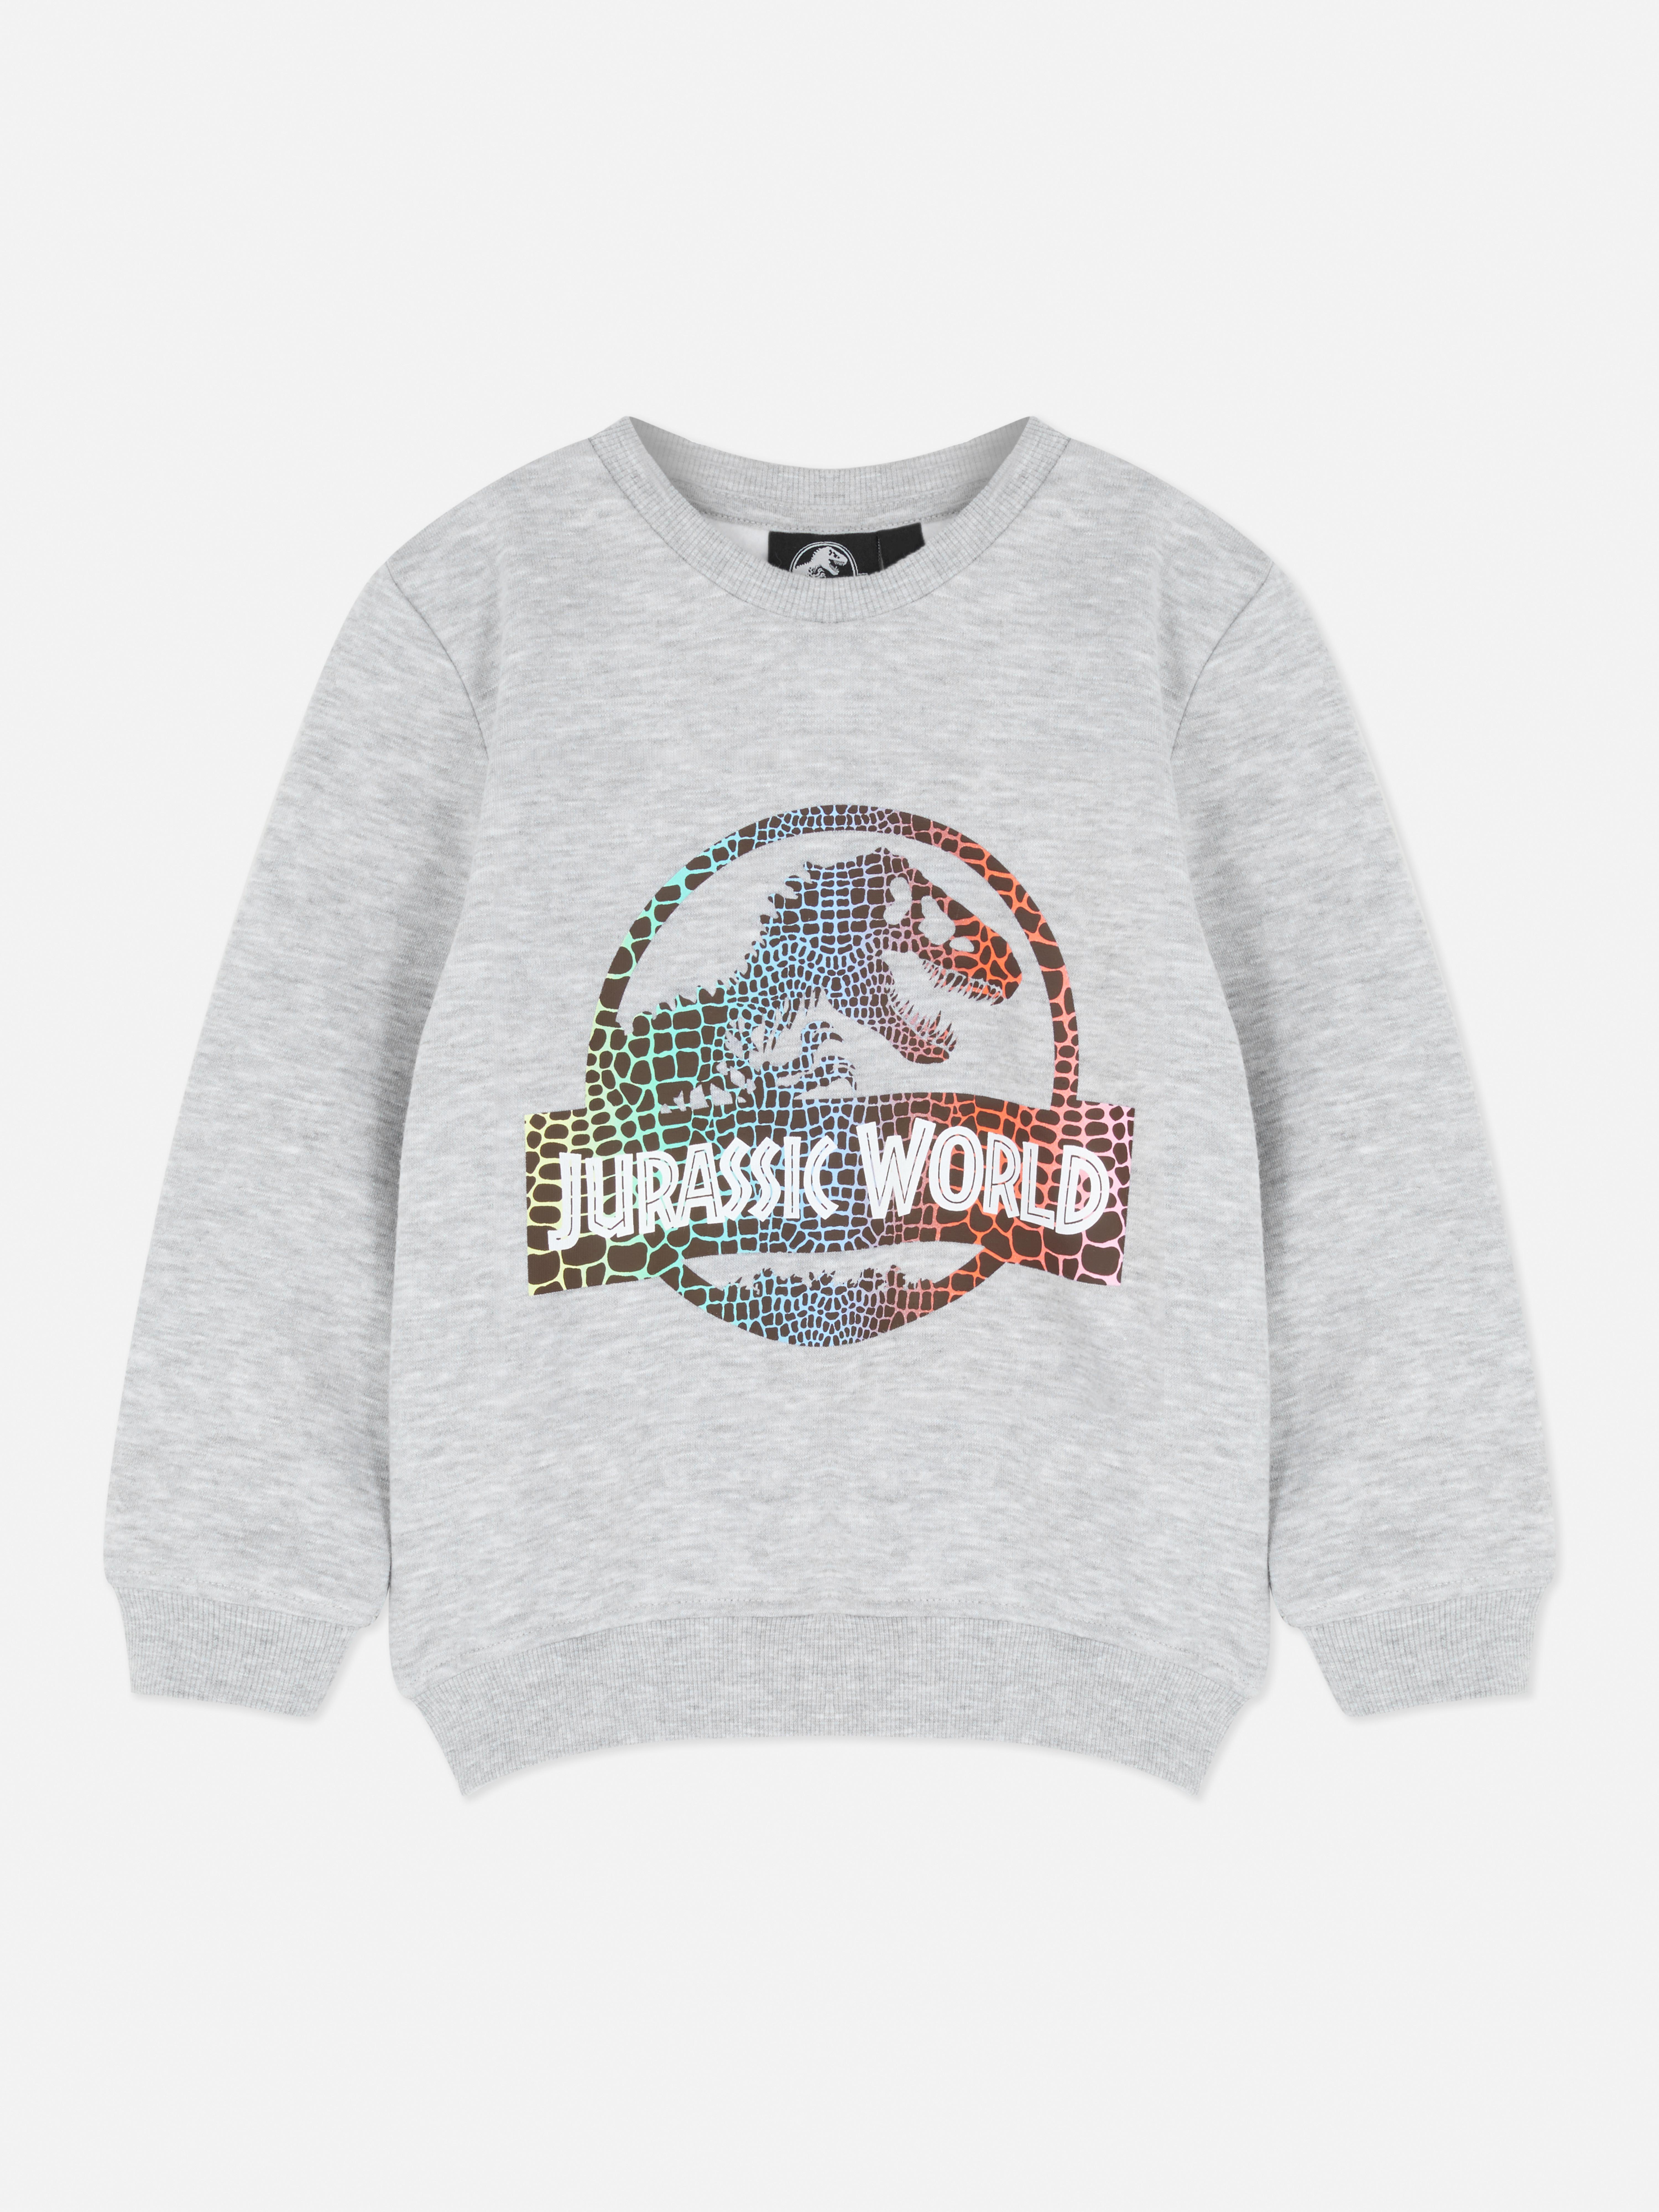 Jurassic World Logo Sweatshirt